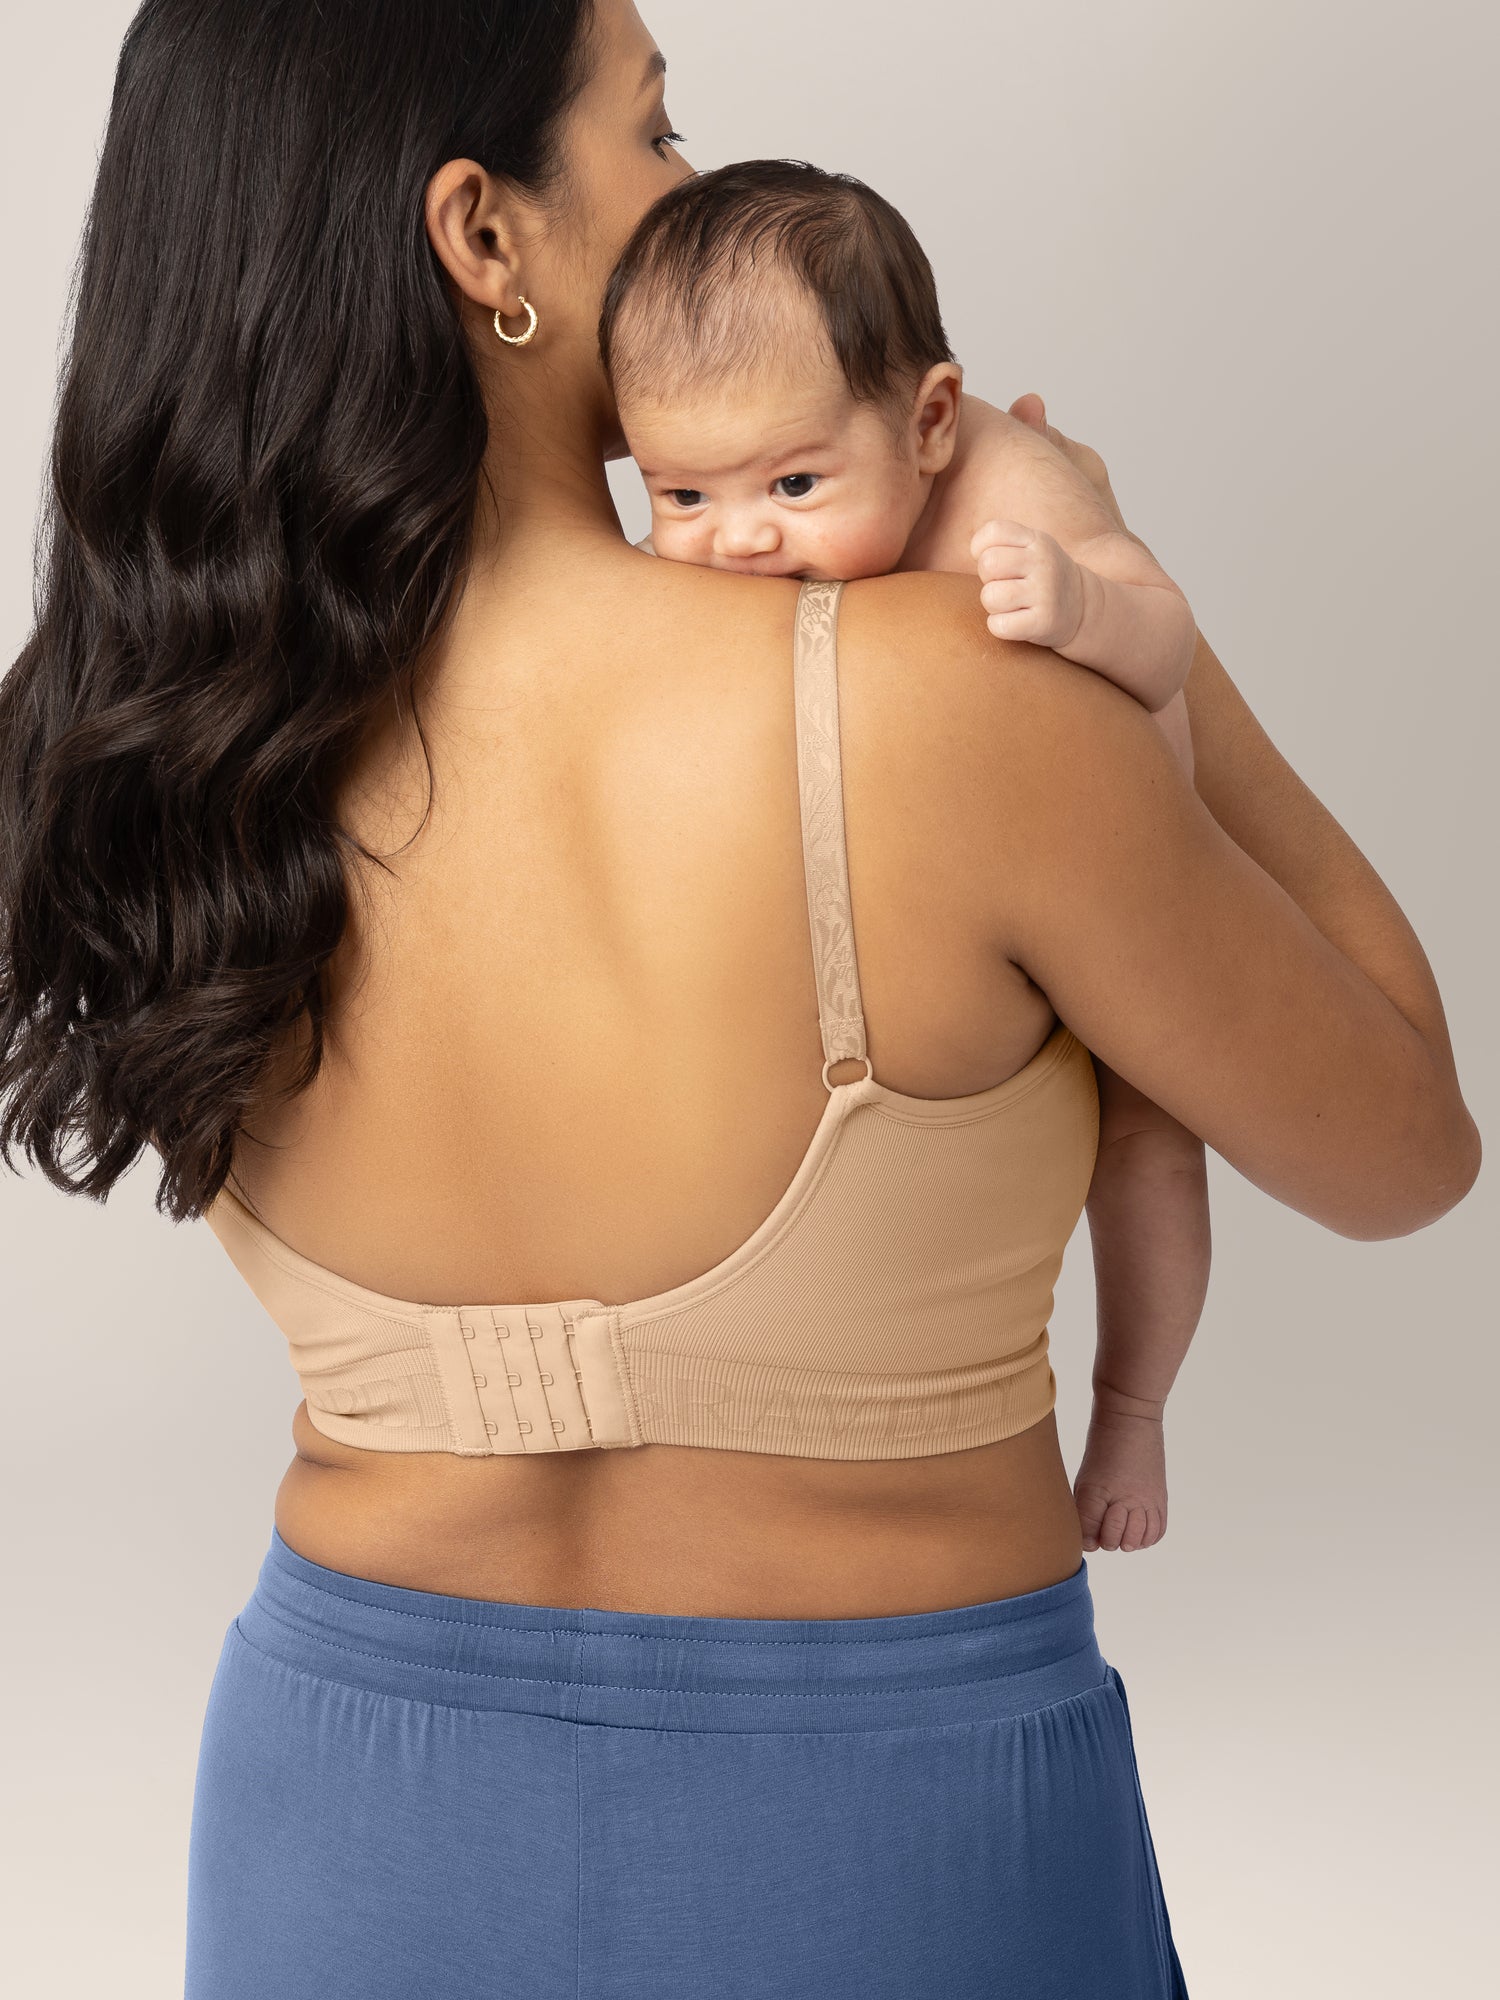 Maternity Bra Hands Free Pumping Bra Adjustable Cotton Breast Pump Bra No  Steel Ring Nursing Bra